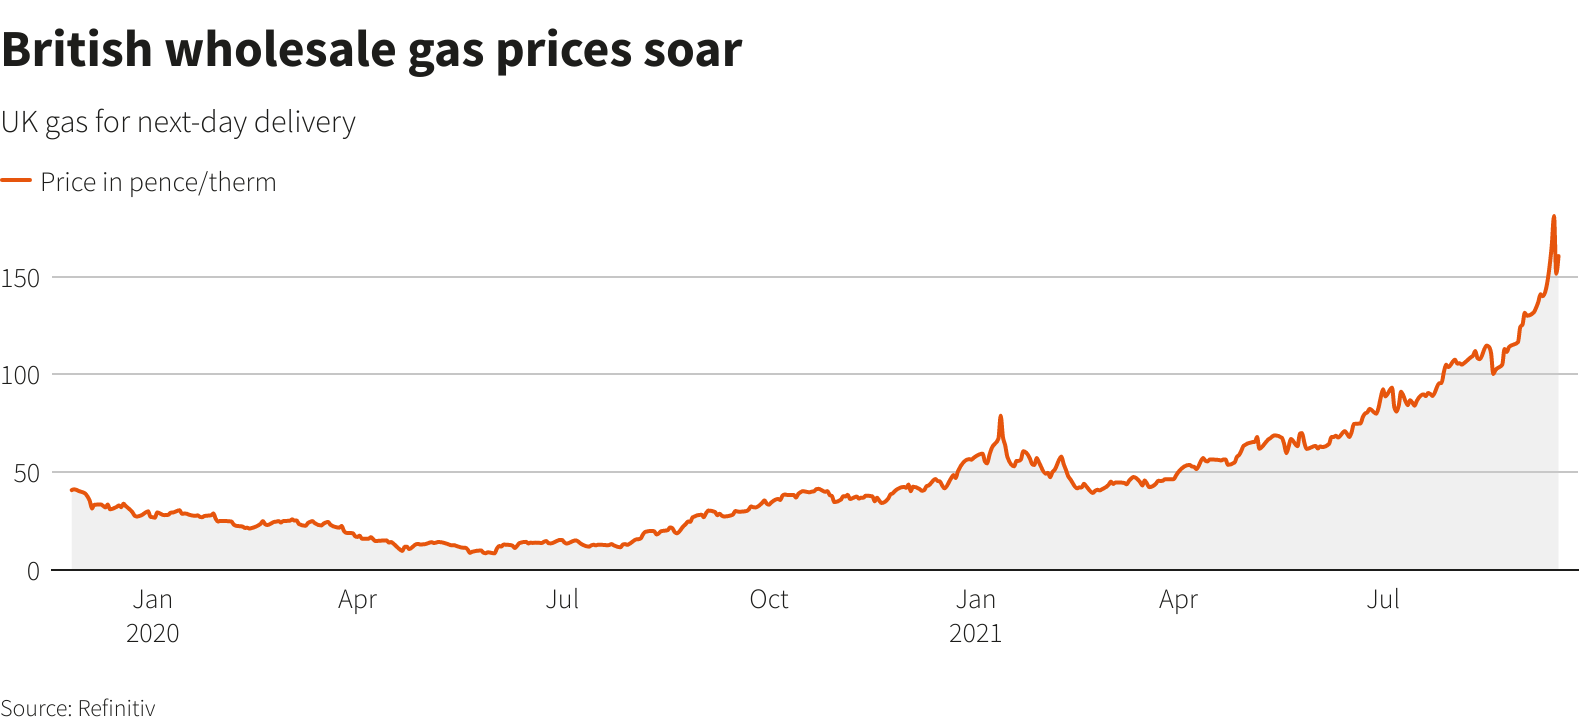 British wholesale gas prices soar